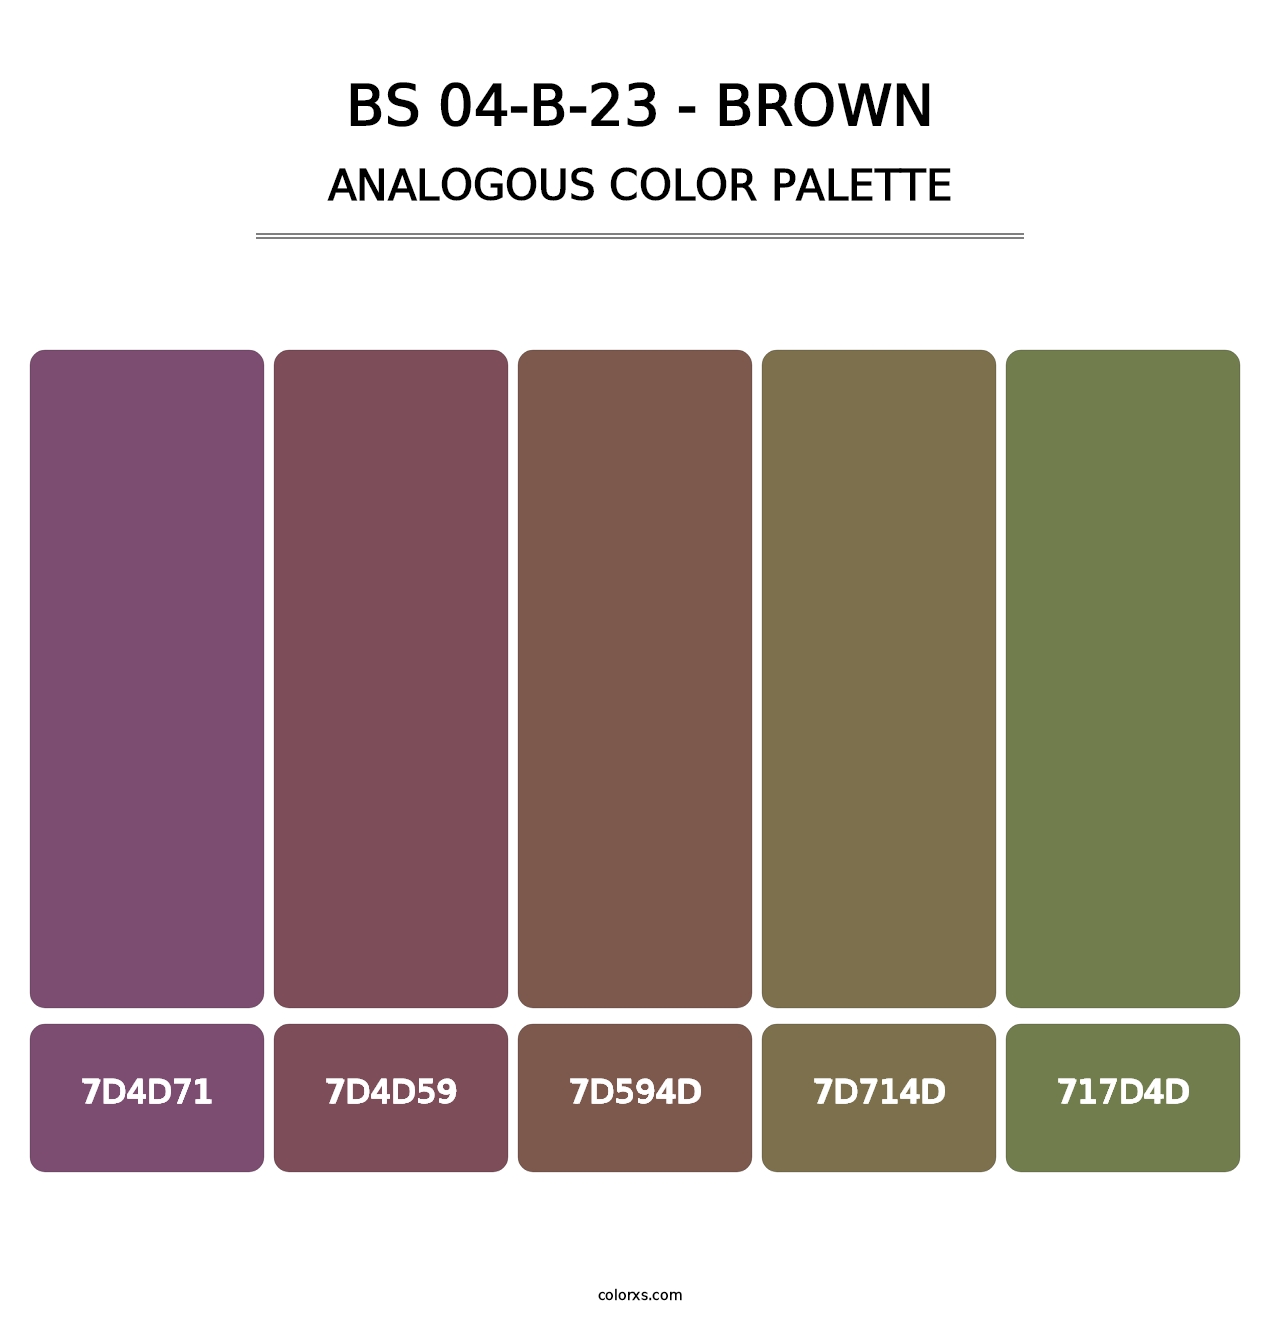 BS 04-B-23 - Brown - Analogous Color Palette